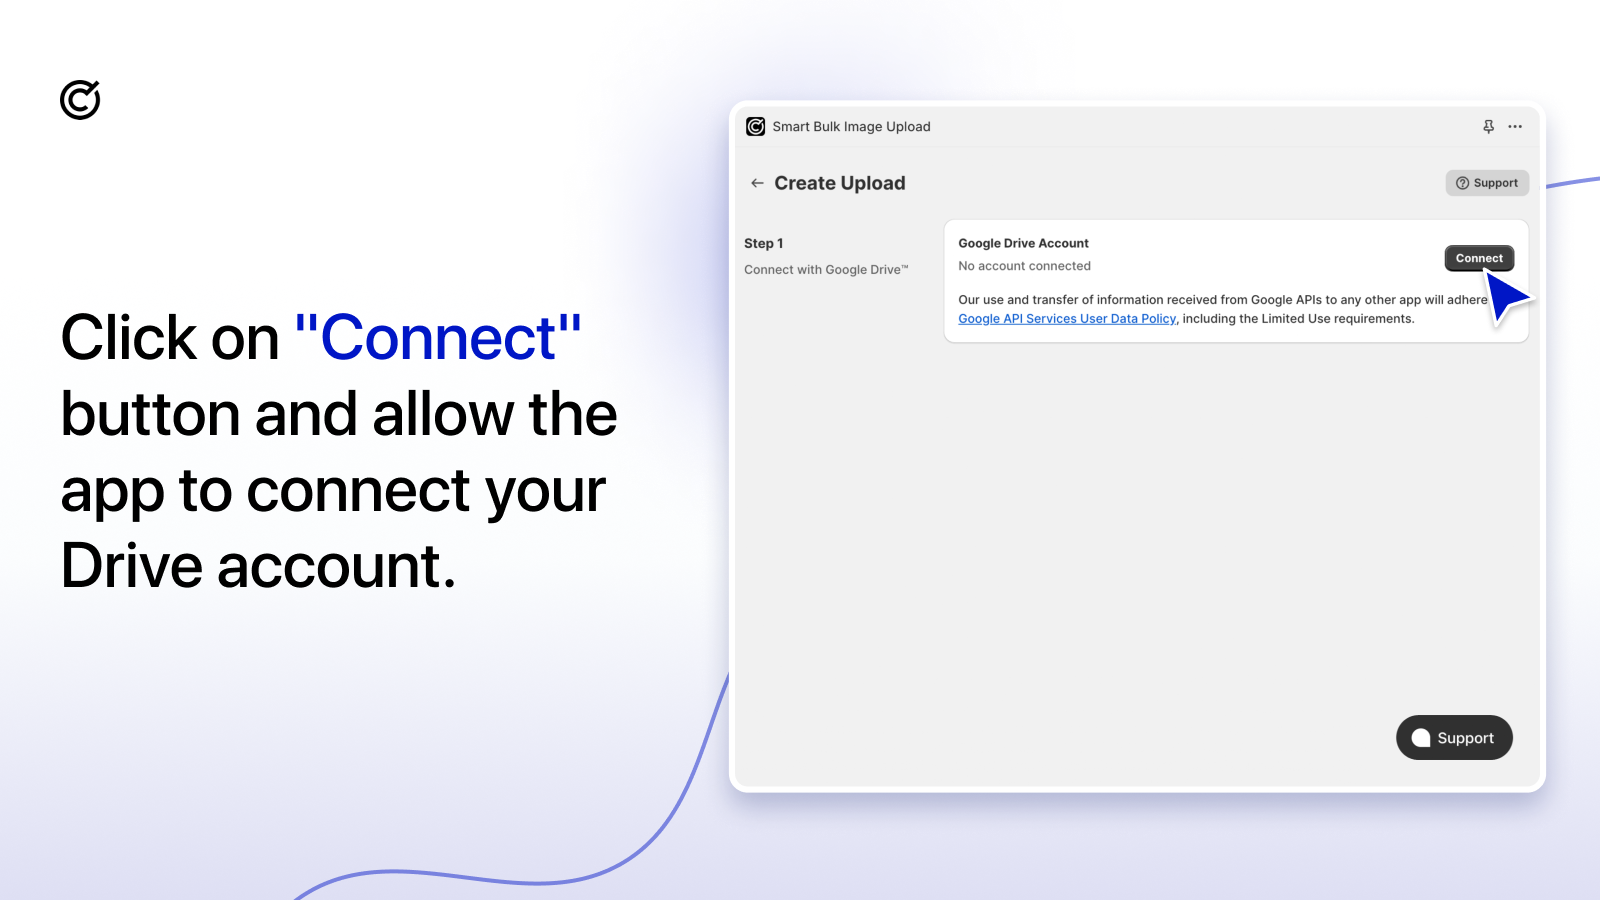 Passo 2: Conecte o aplicativo ao seu Google Drive para acessar as fotos do produto